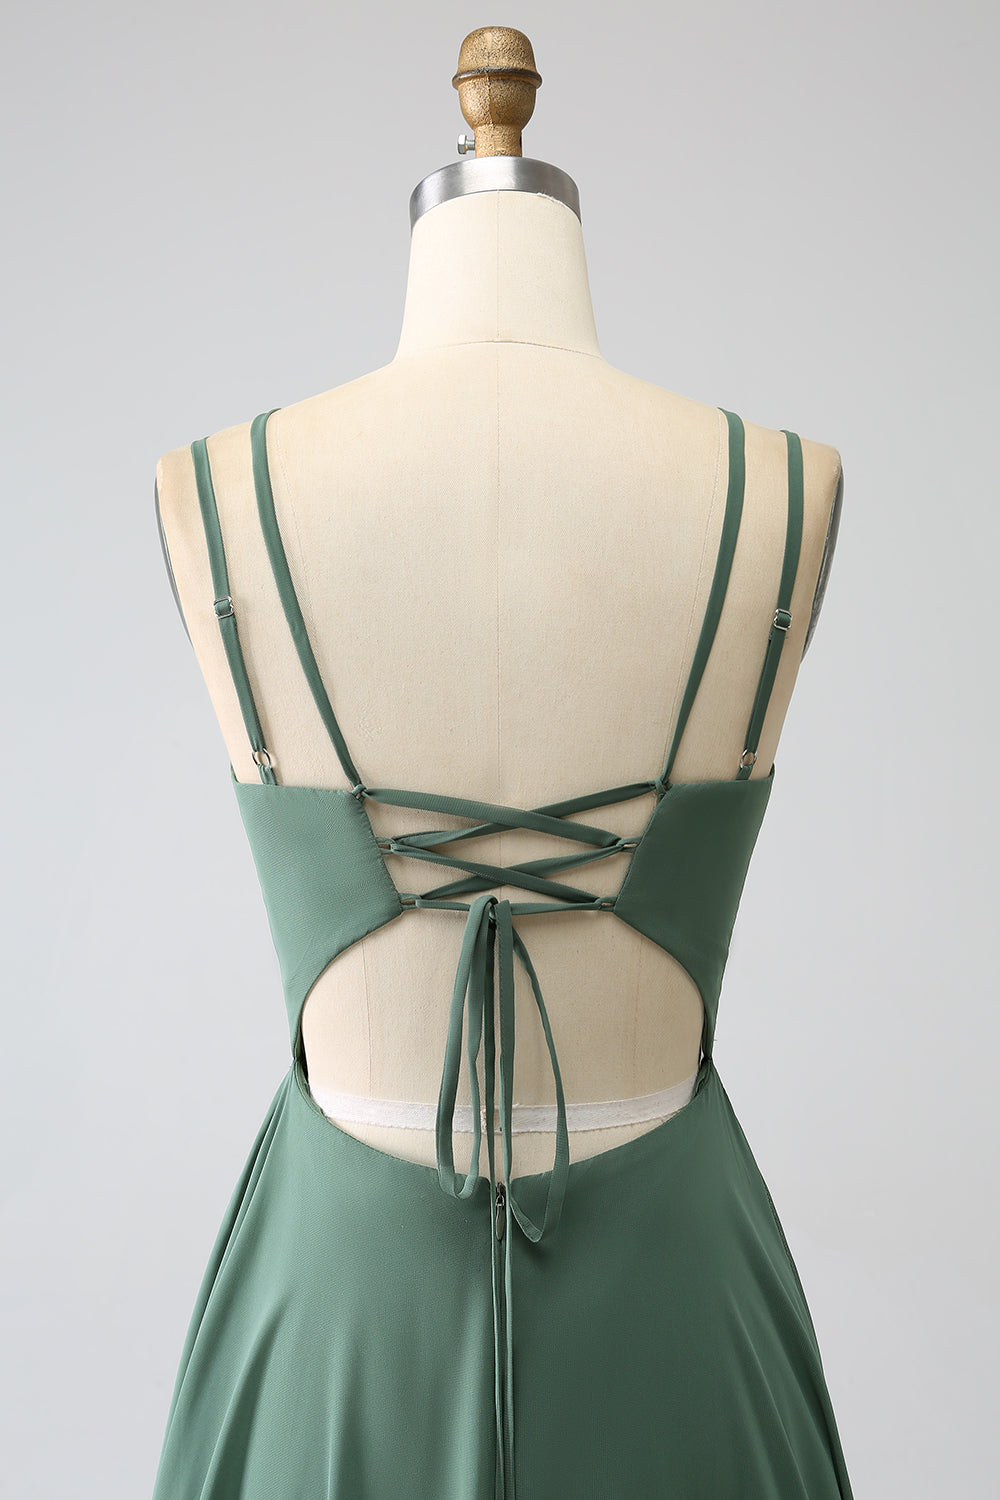 Eucalyptus A-Line Spaghetti Straps Backless Pleated Long Bridesmaid Dress